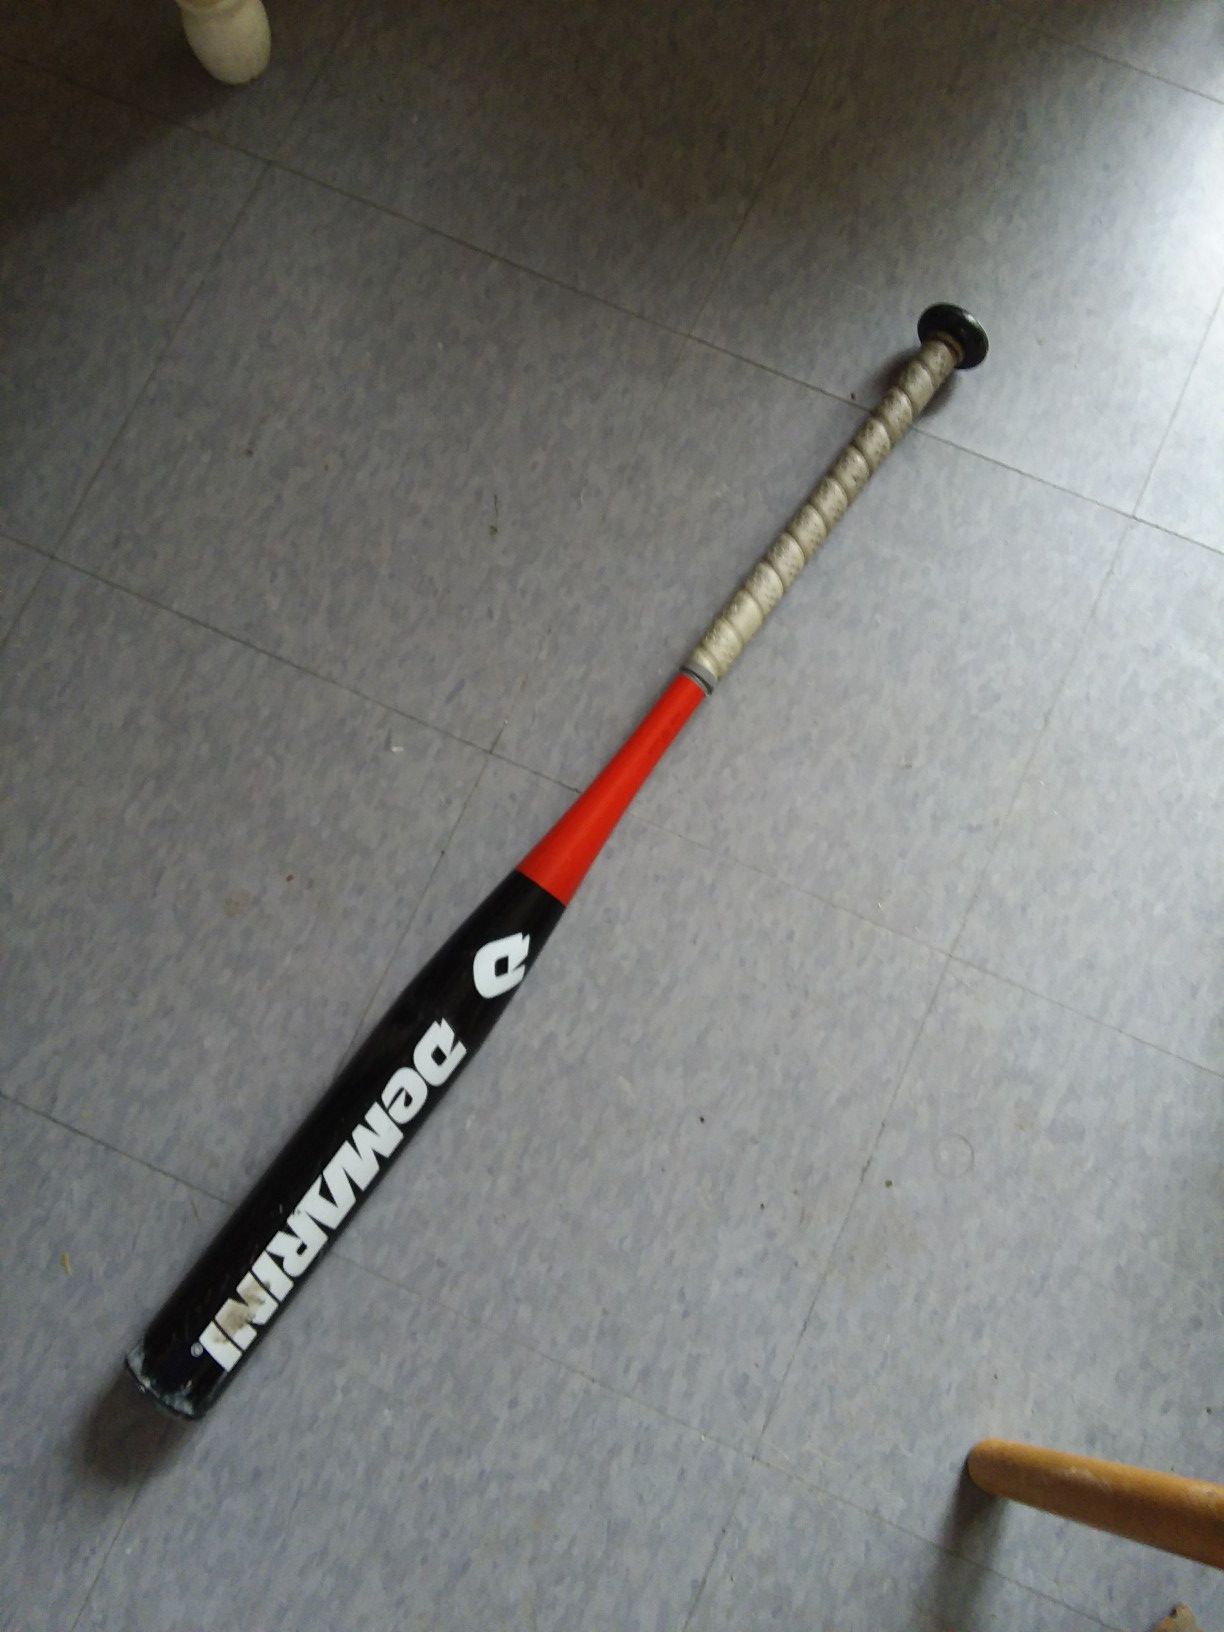 Little leage official baseball bat.